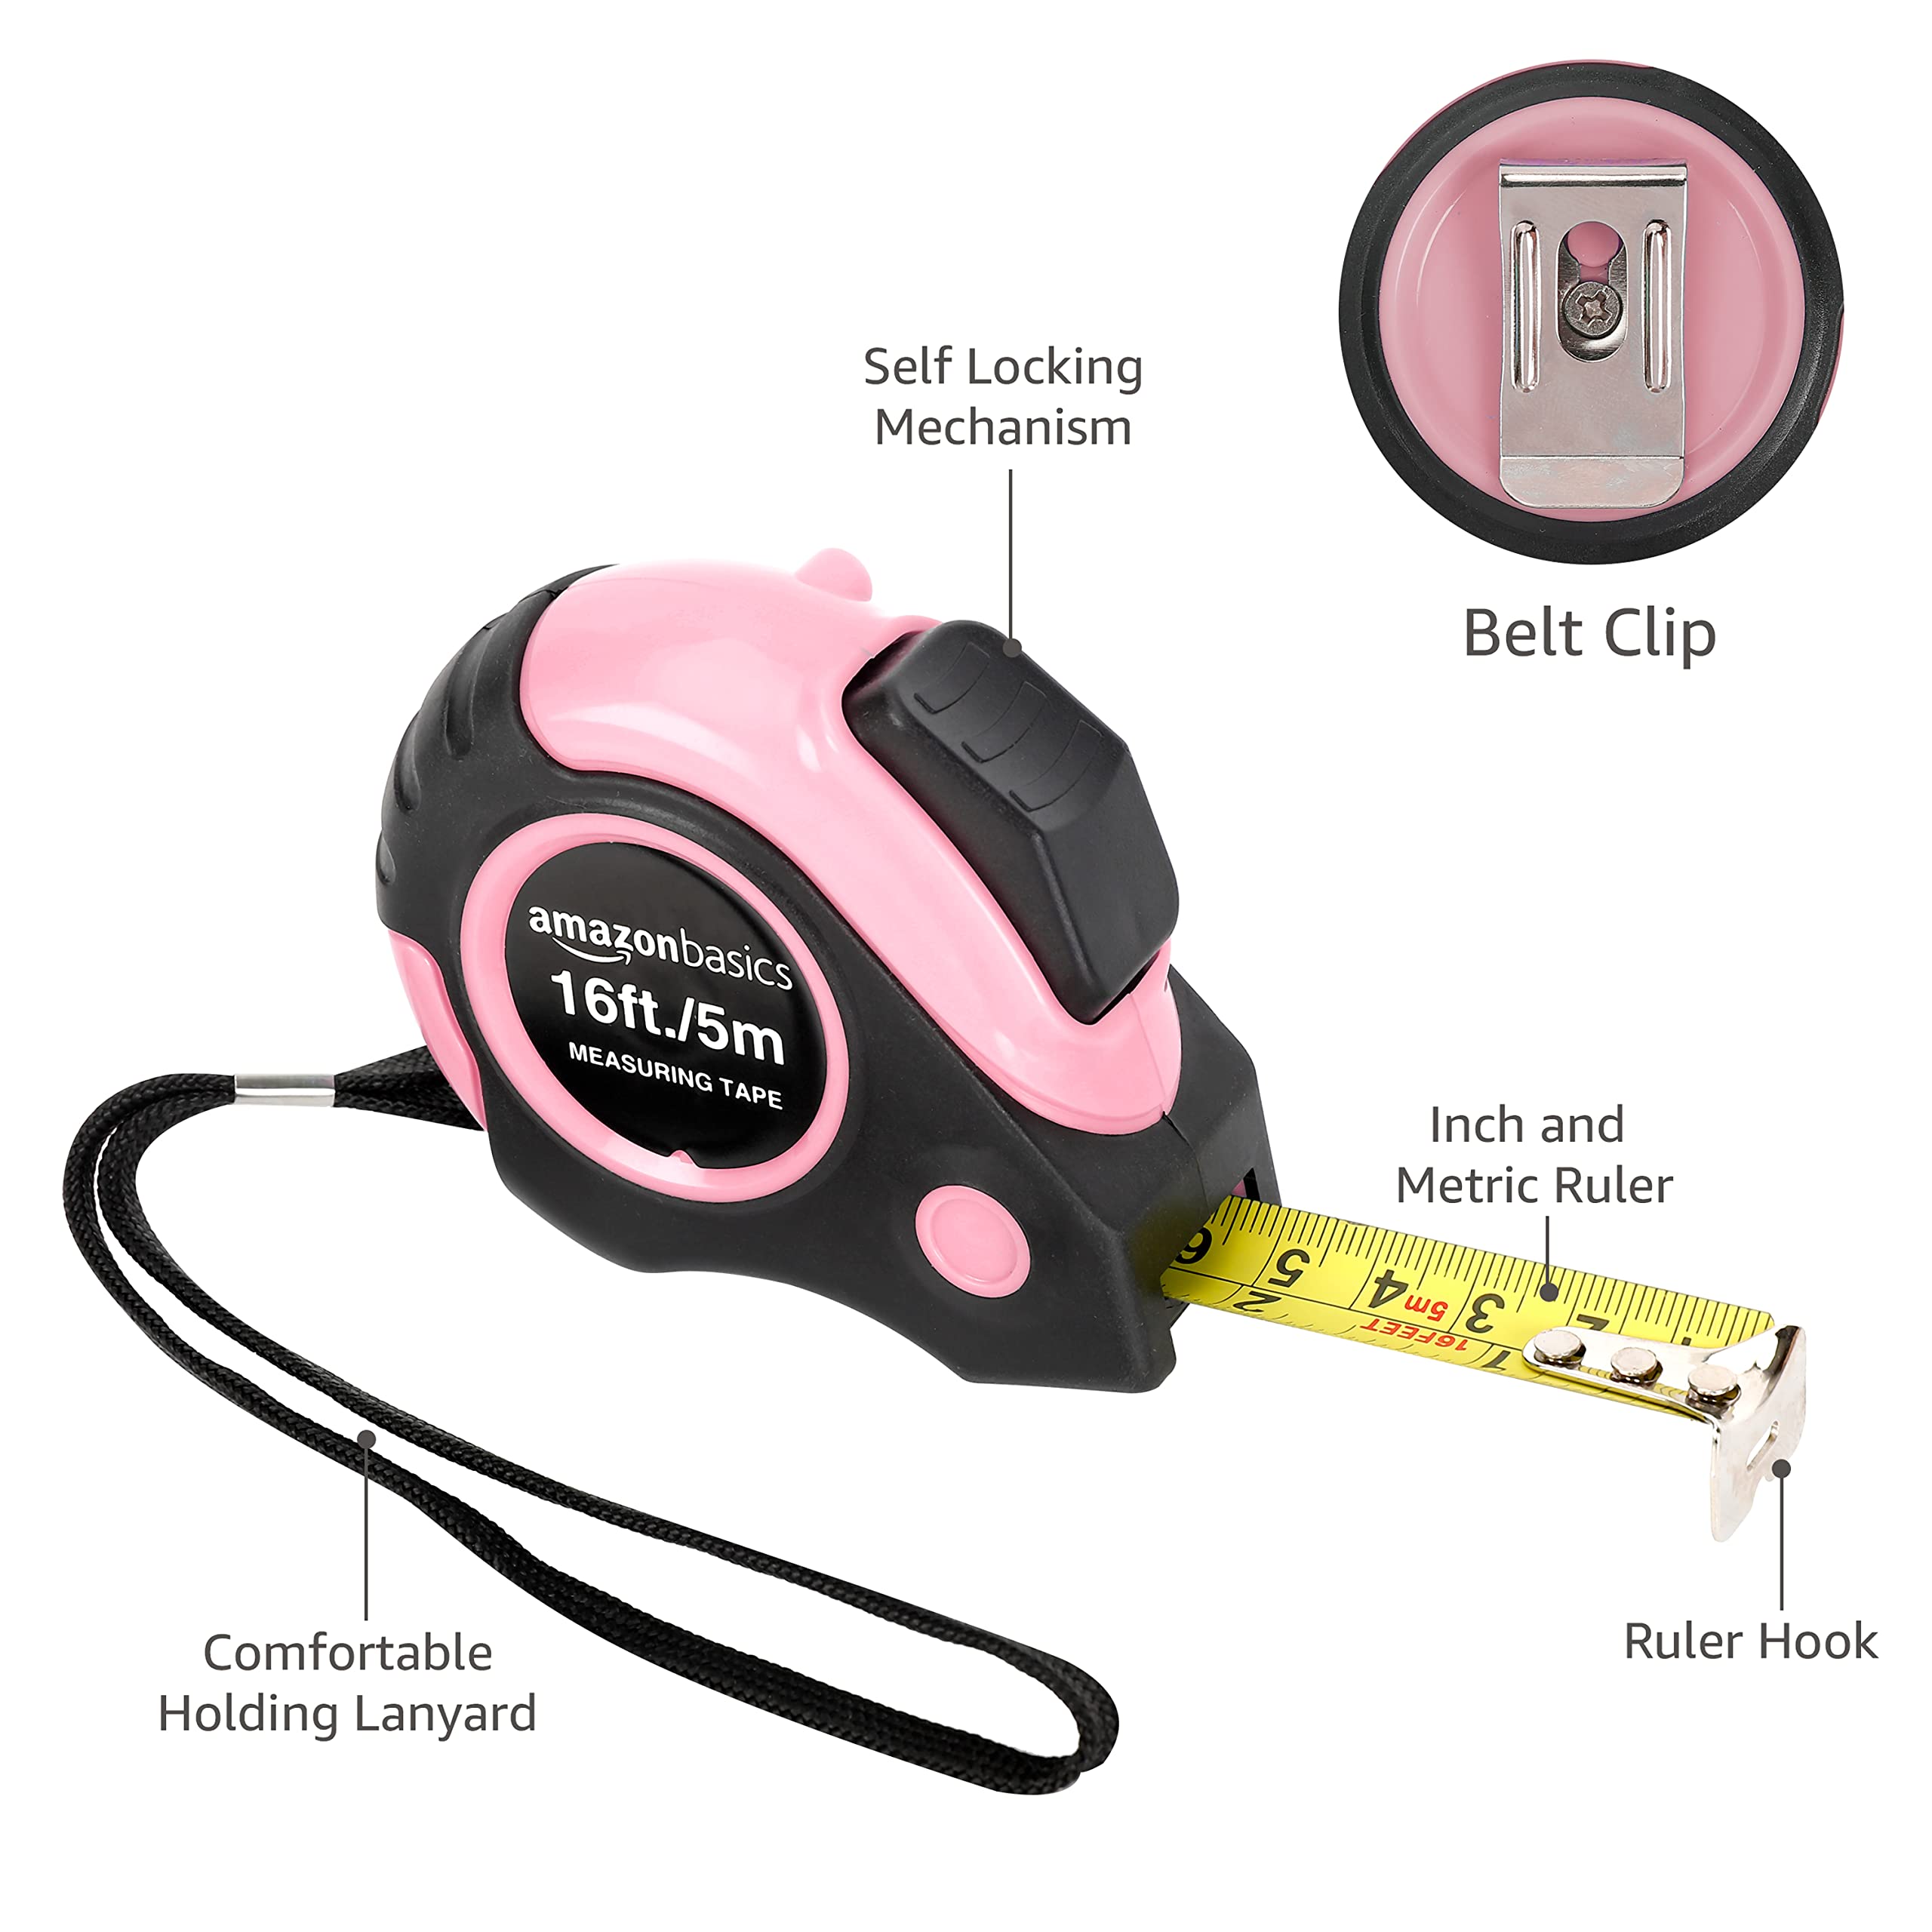 Amazon Basics Tape Measure - 16 Feet, Pink